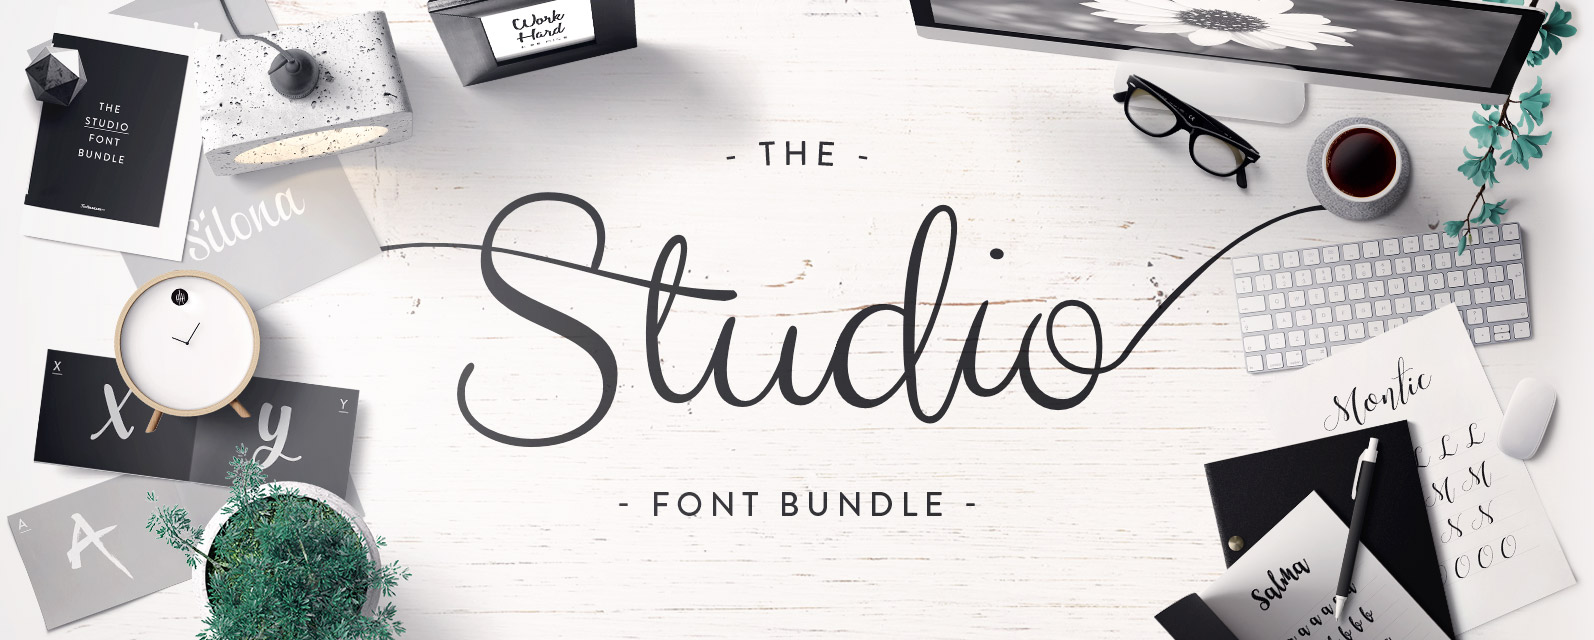 The Studio Font Bundle Cover